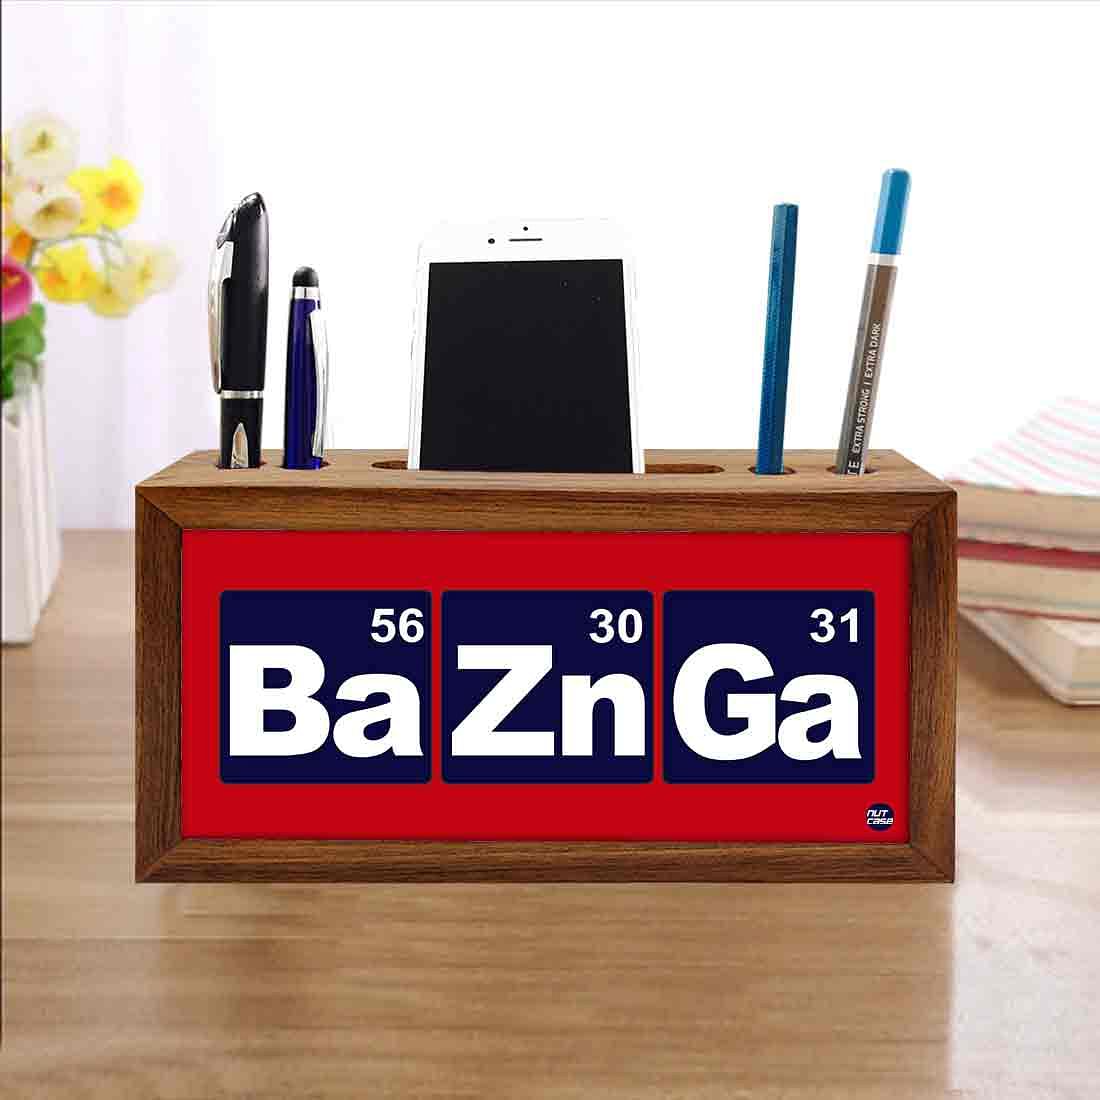 Wooden Mobile and Pen Holder Office Desk Organizer - Bazinga Red Nutcase